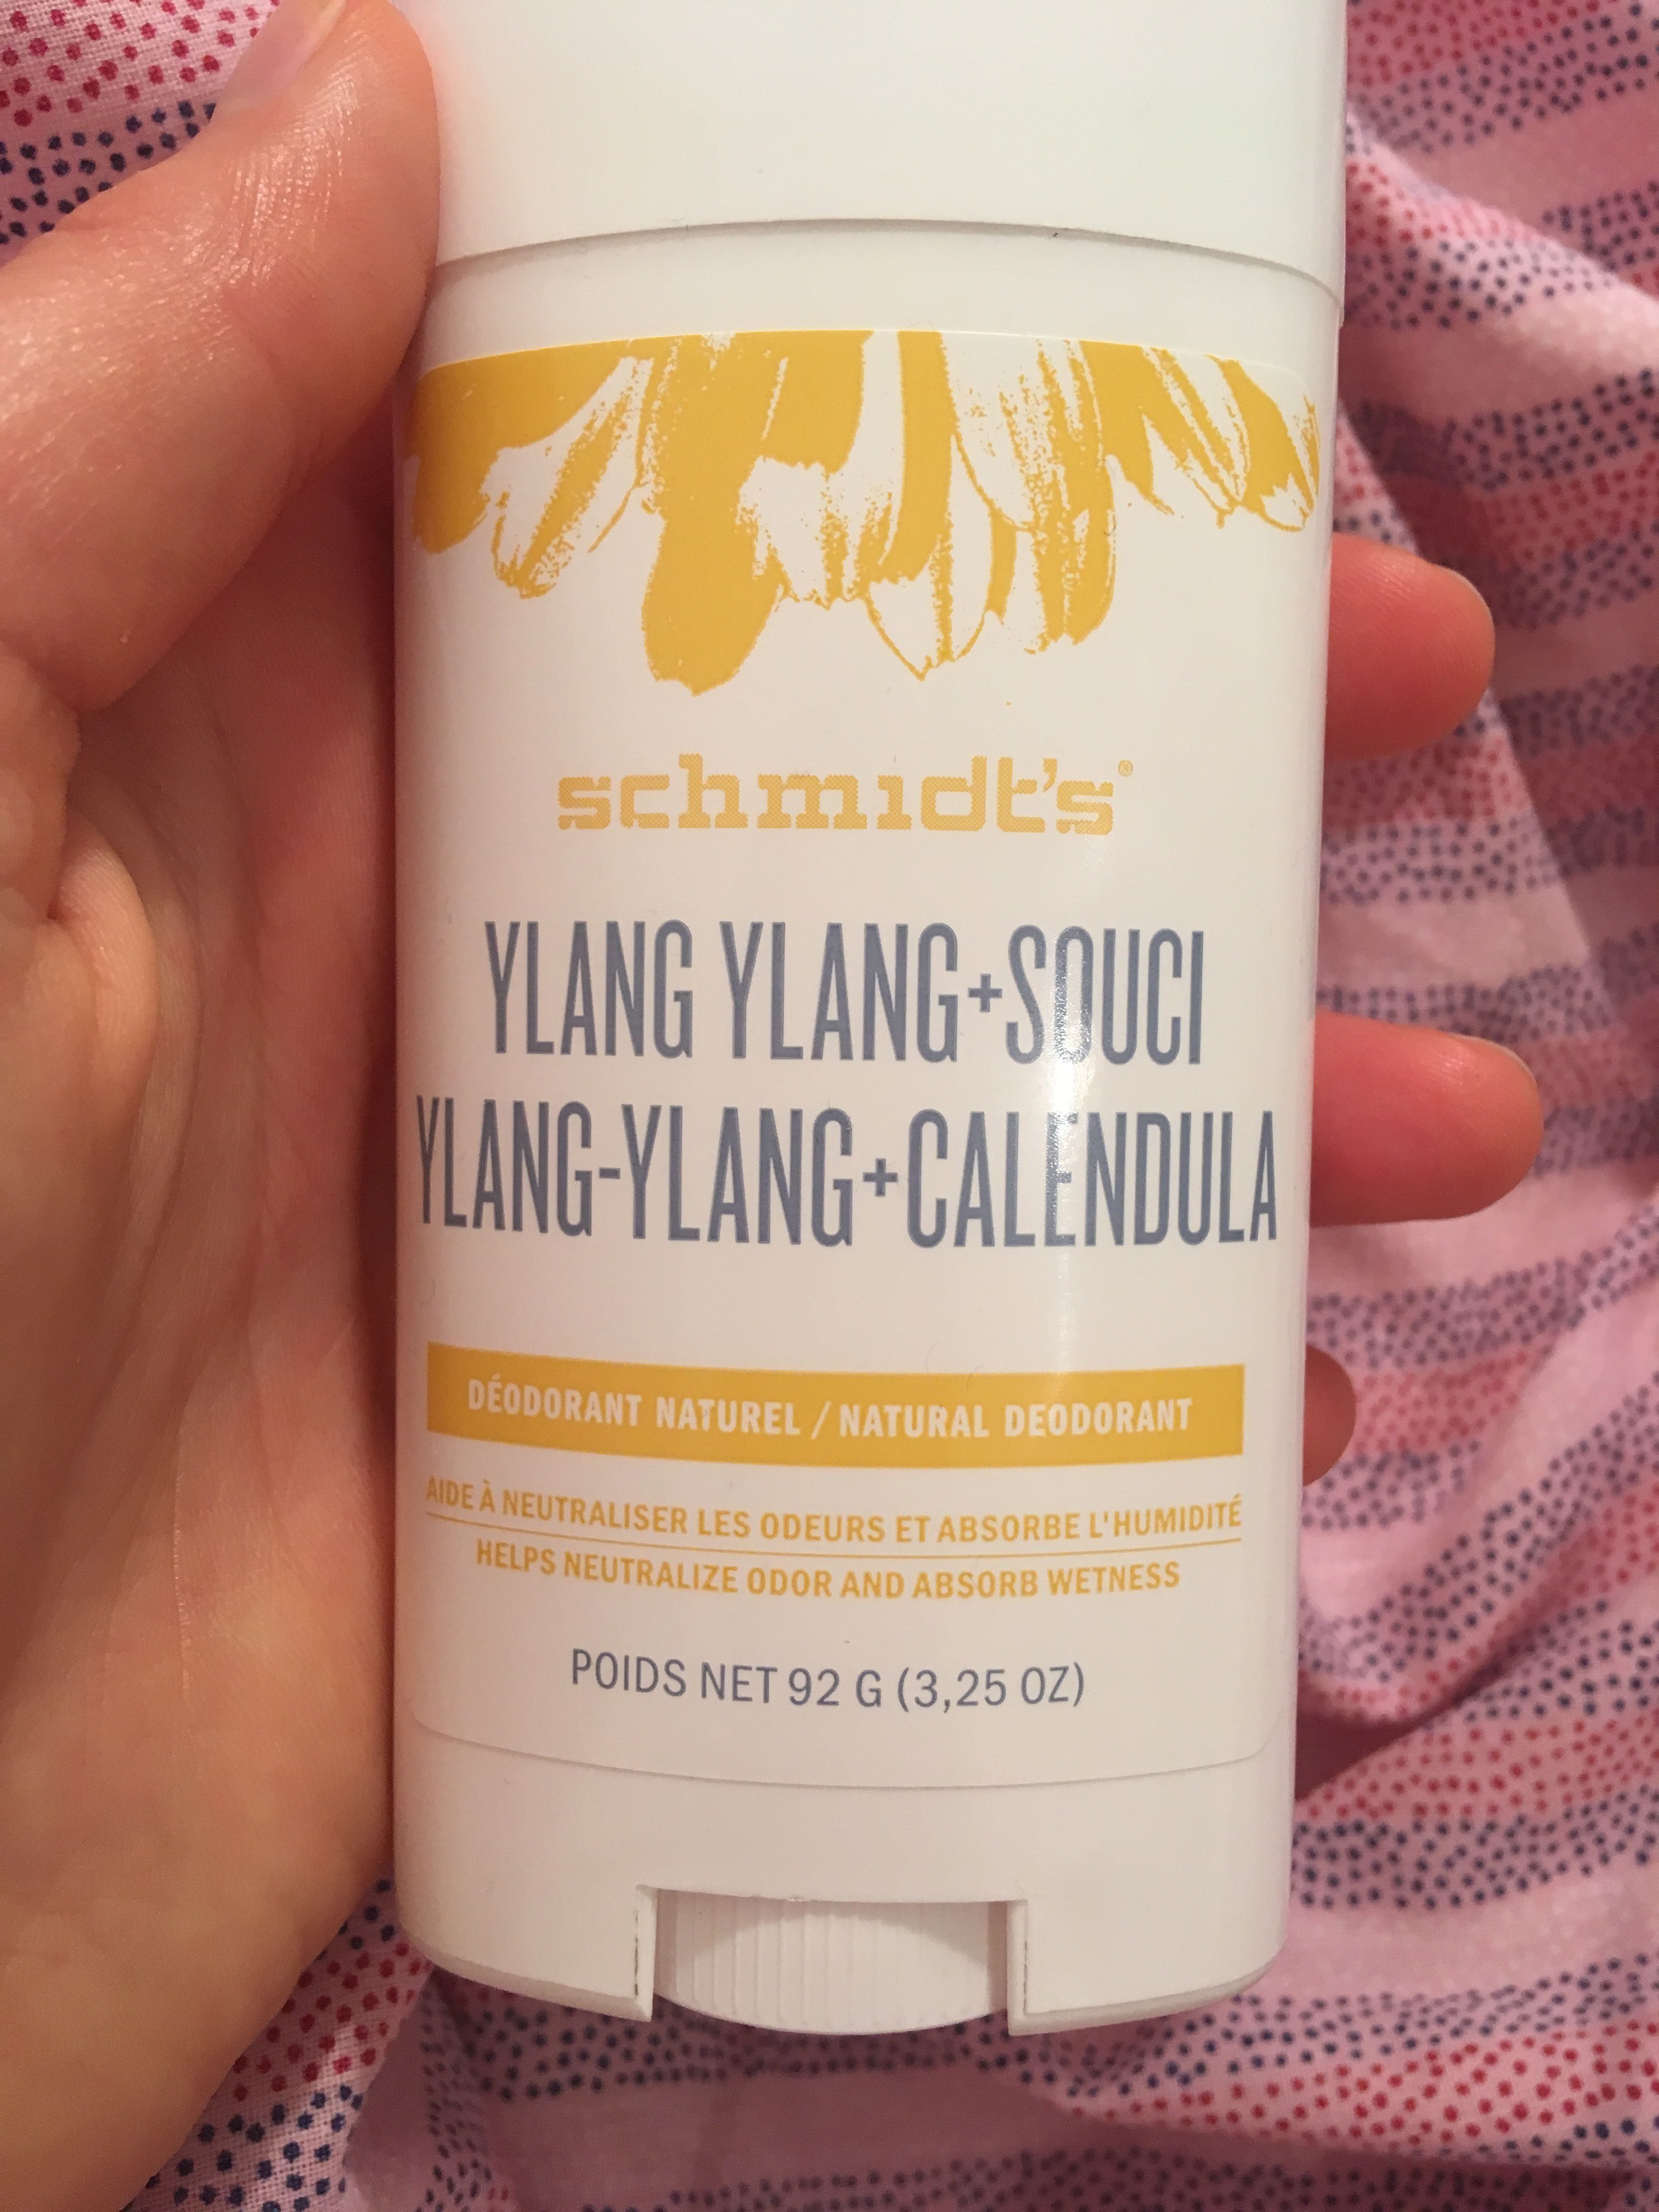 Ylang-Ylang + Calendula Deodorant naturel - Produit - fr